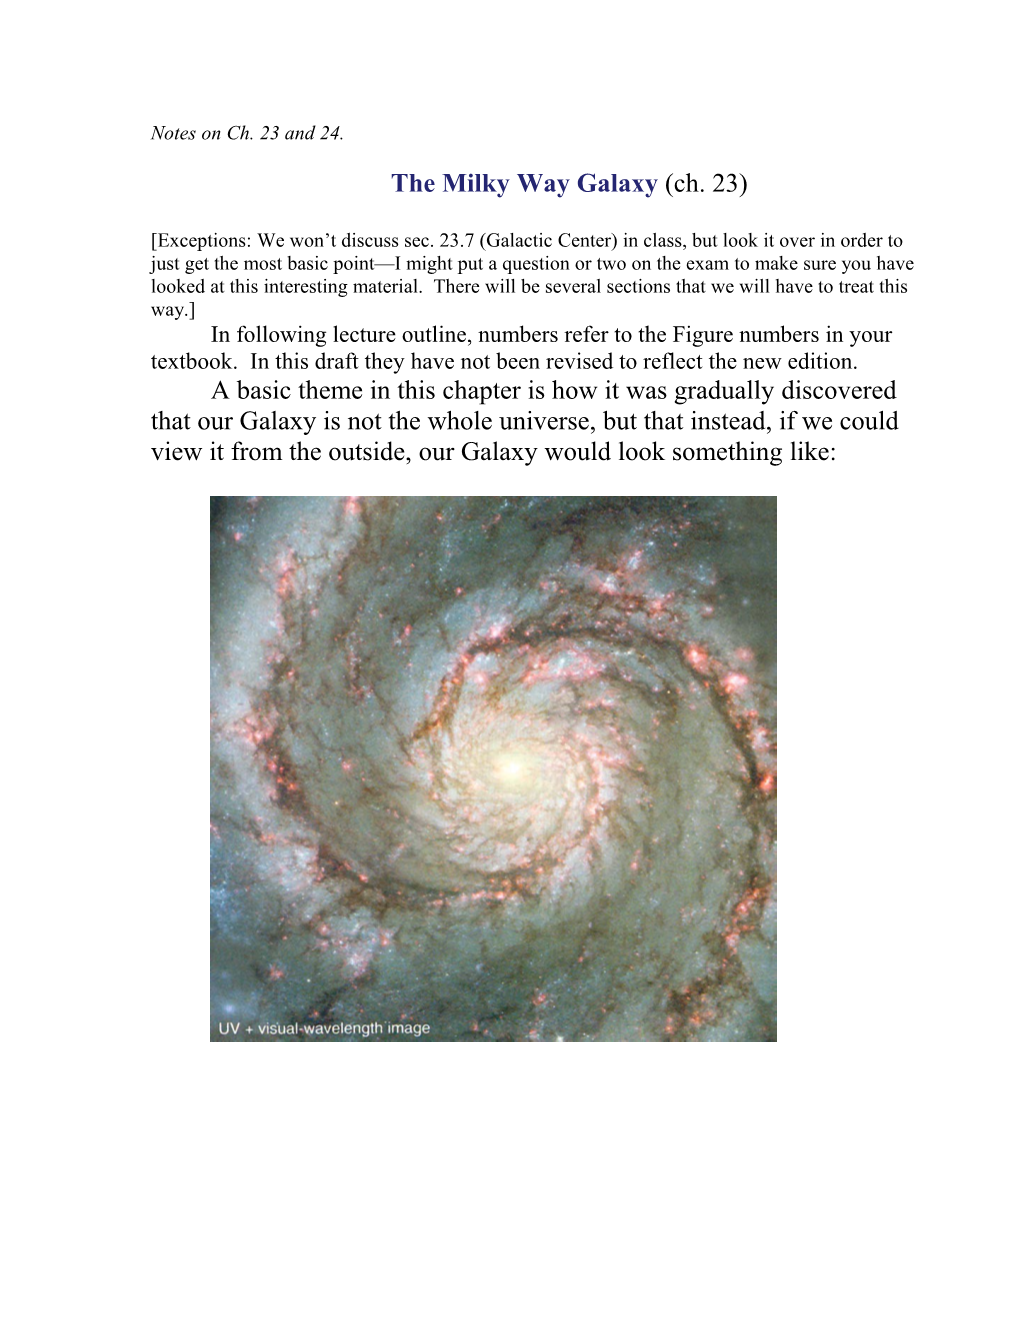 The Milky Way Galaxy (Ch. 23)